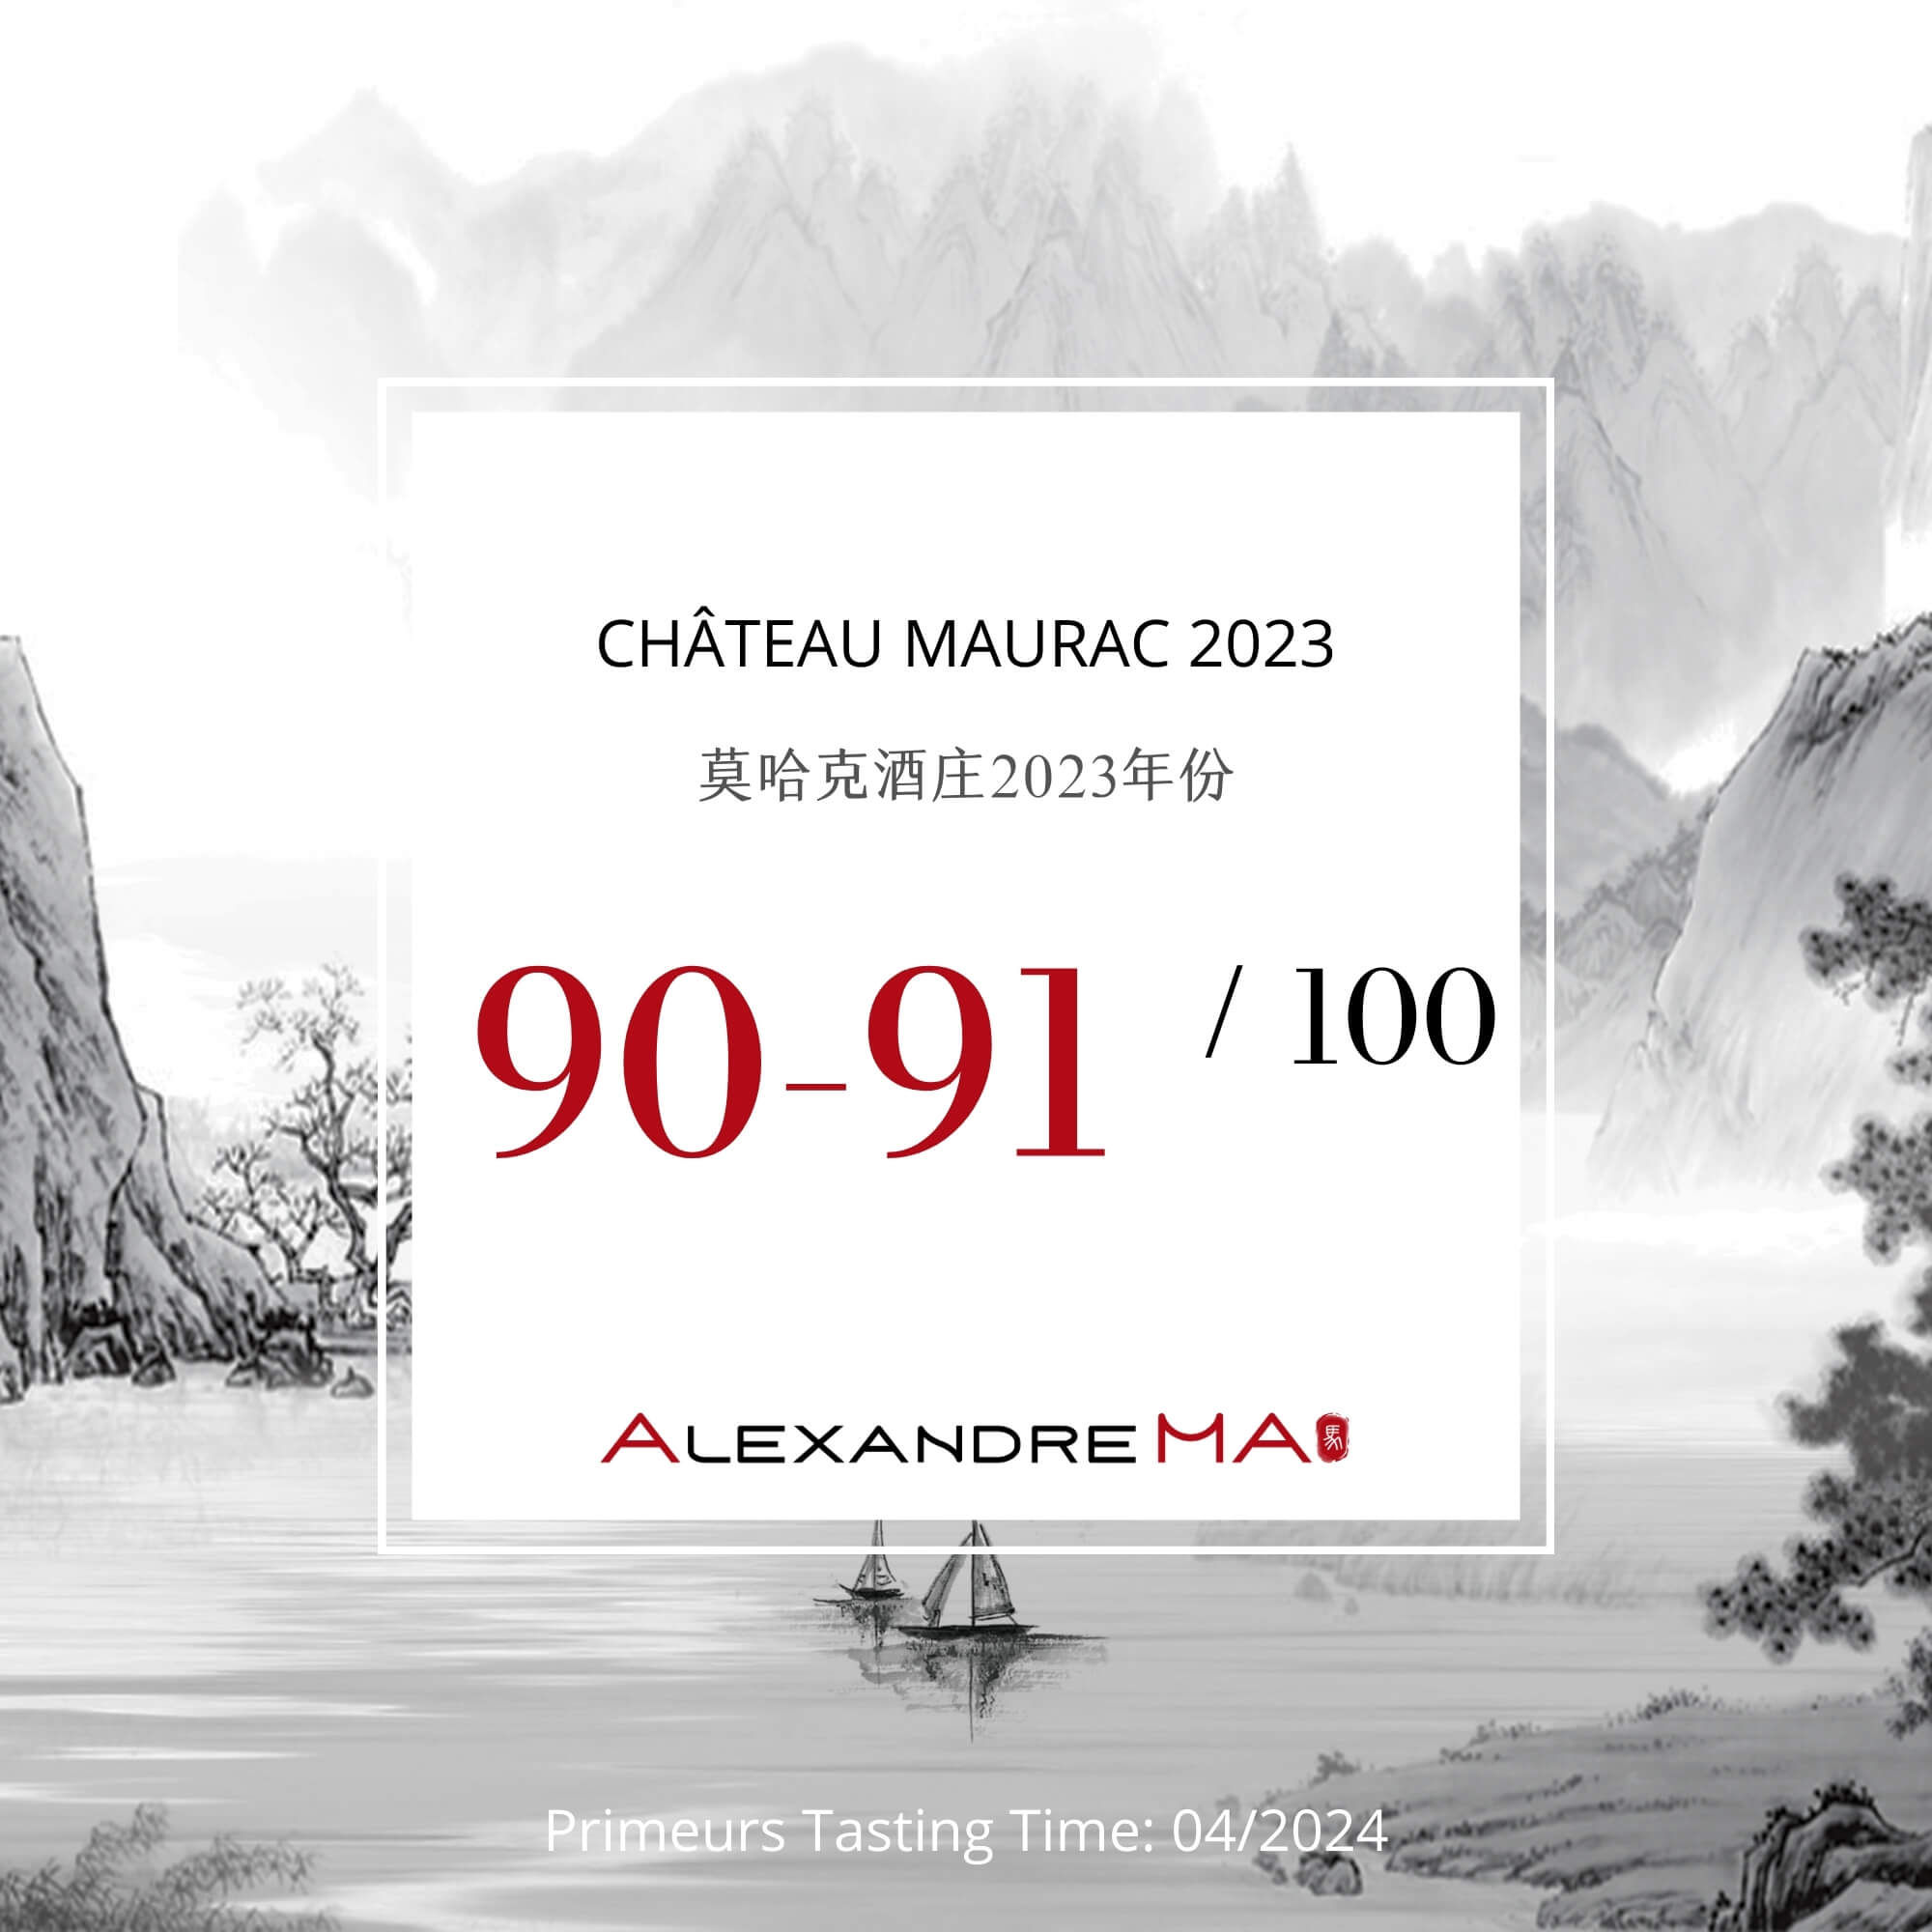 Château Maurac 2023 Primeurs 莫哈克酒庄 - Alexandre Ma